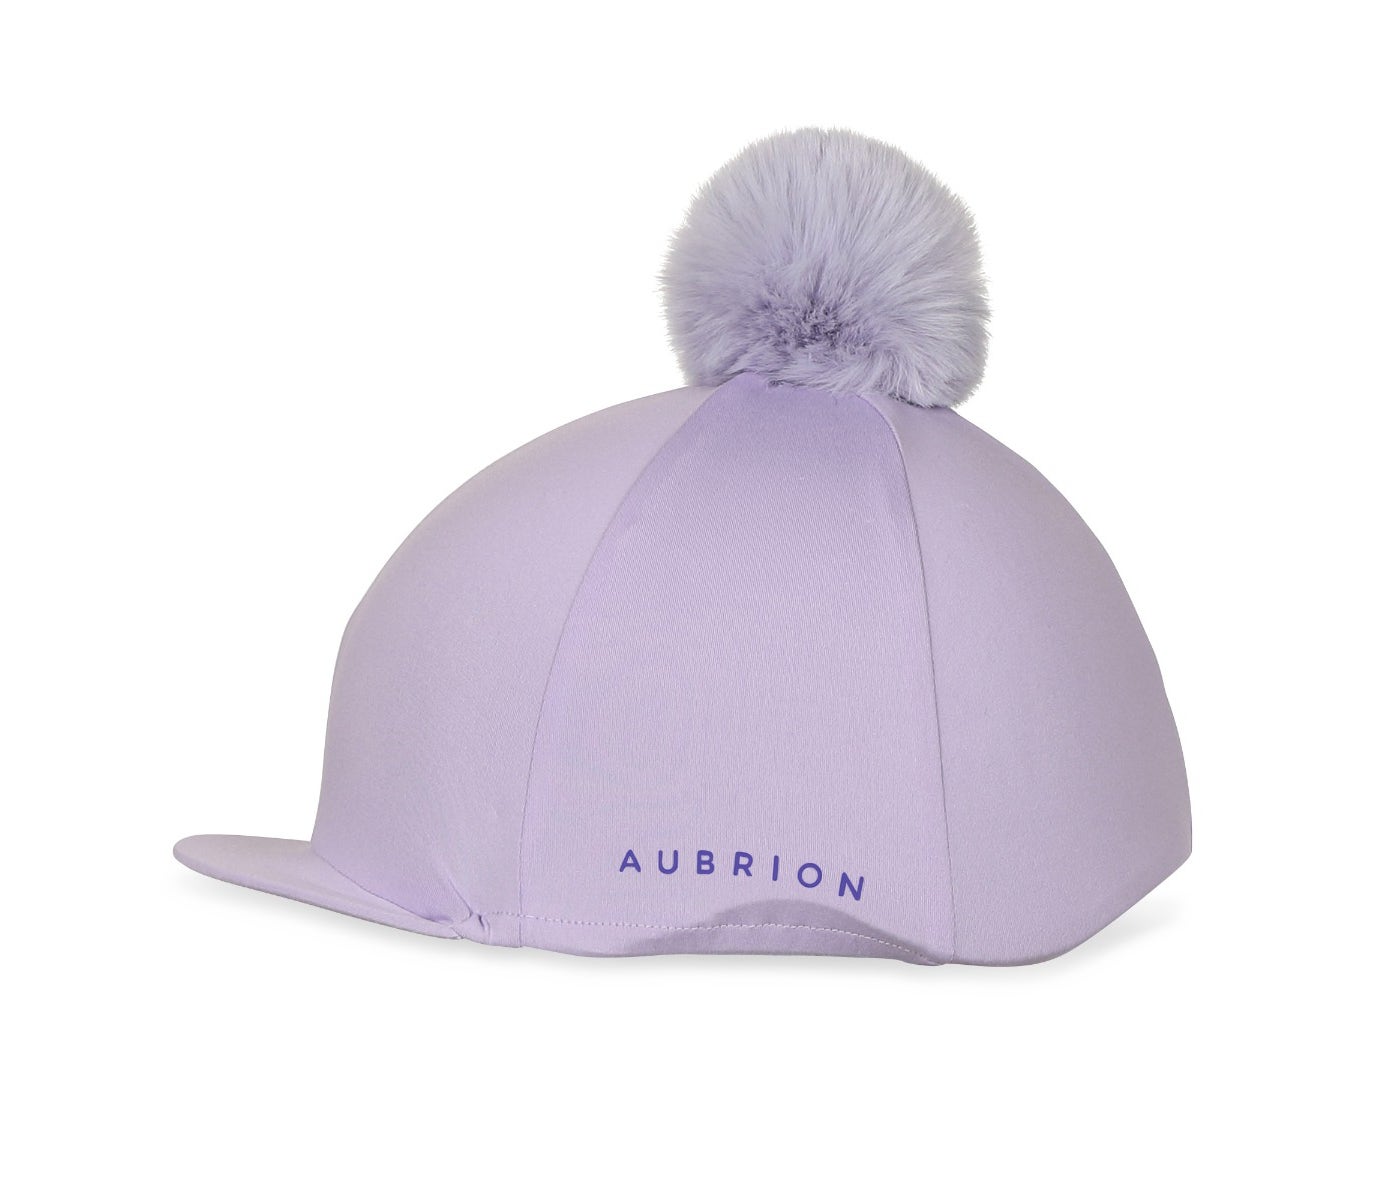 Aubrion Pom Pom Hat Cover - Lavender